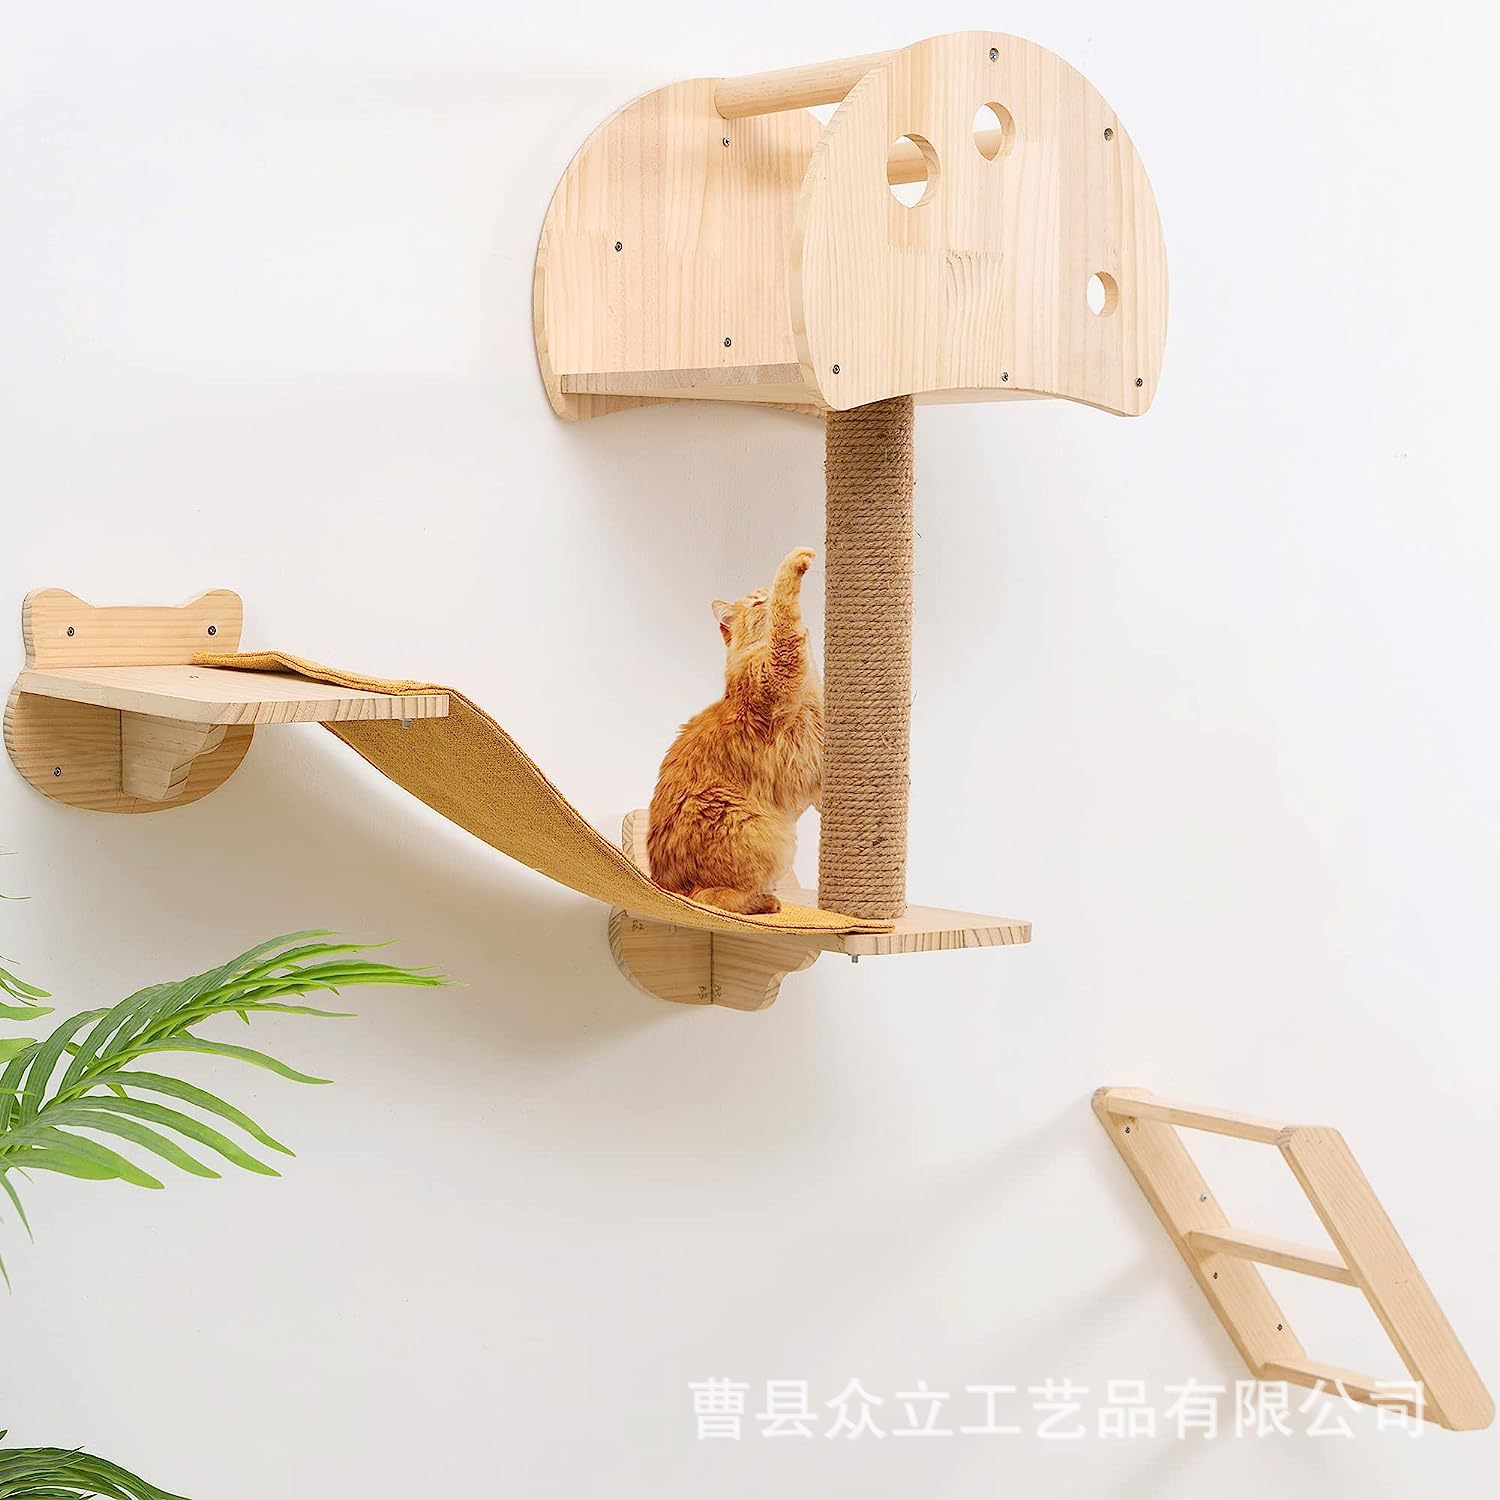 New Cat Climbing Frame Solid Wood Wall Jumping Platform Shelf Wall-Mounted Cat Nest Scratching Pole Cat Toy Cat Climbing Frame